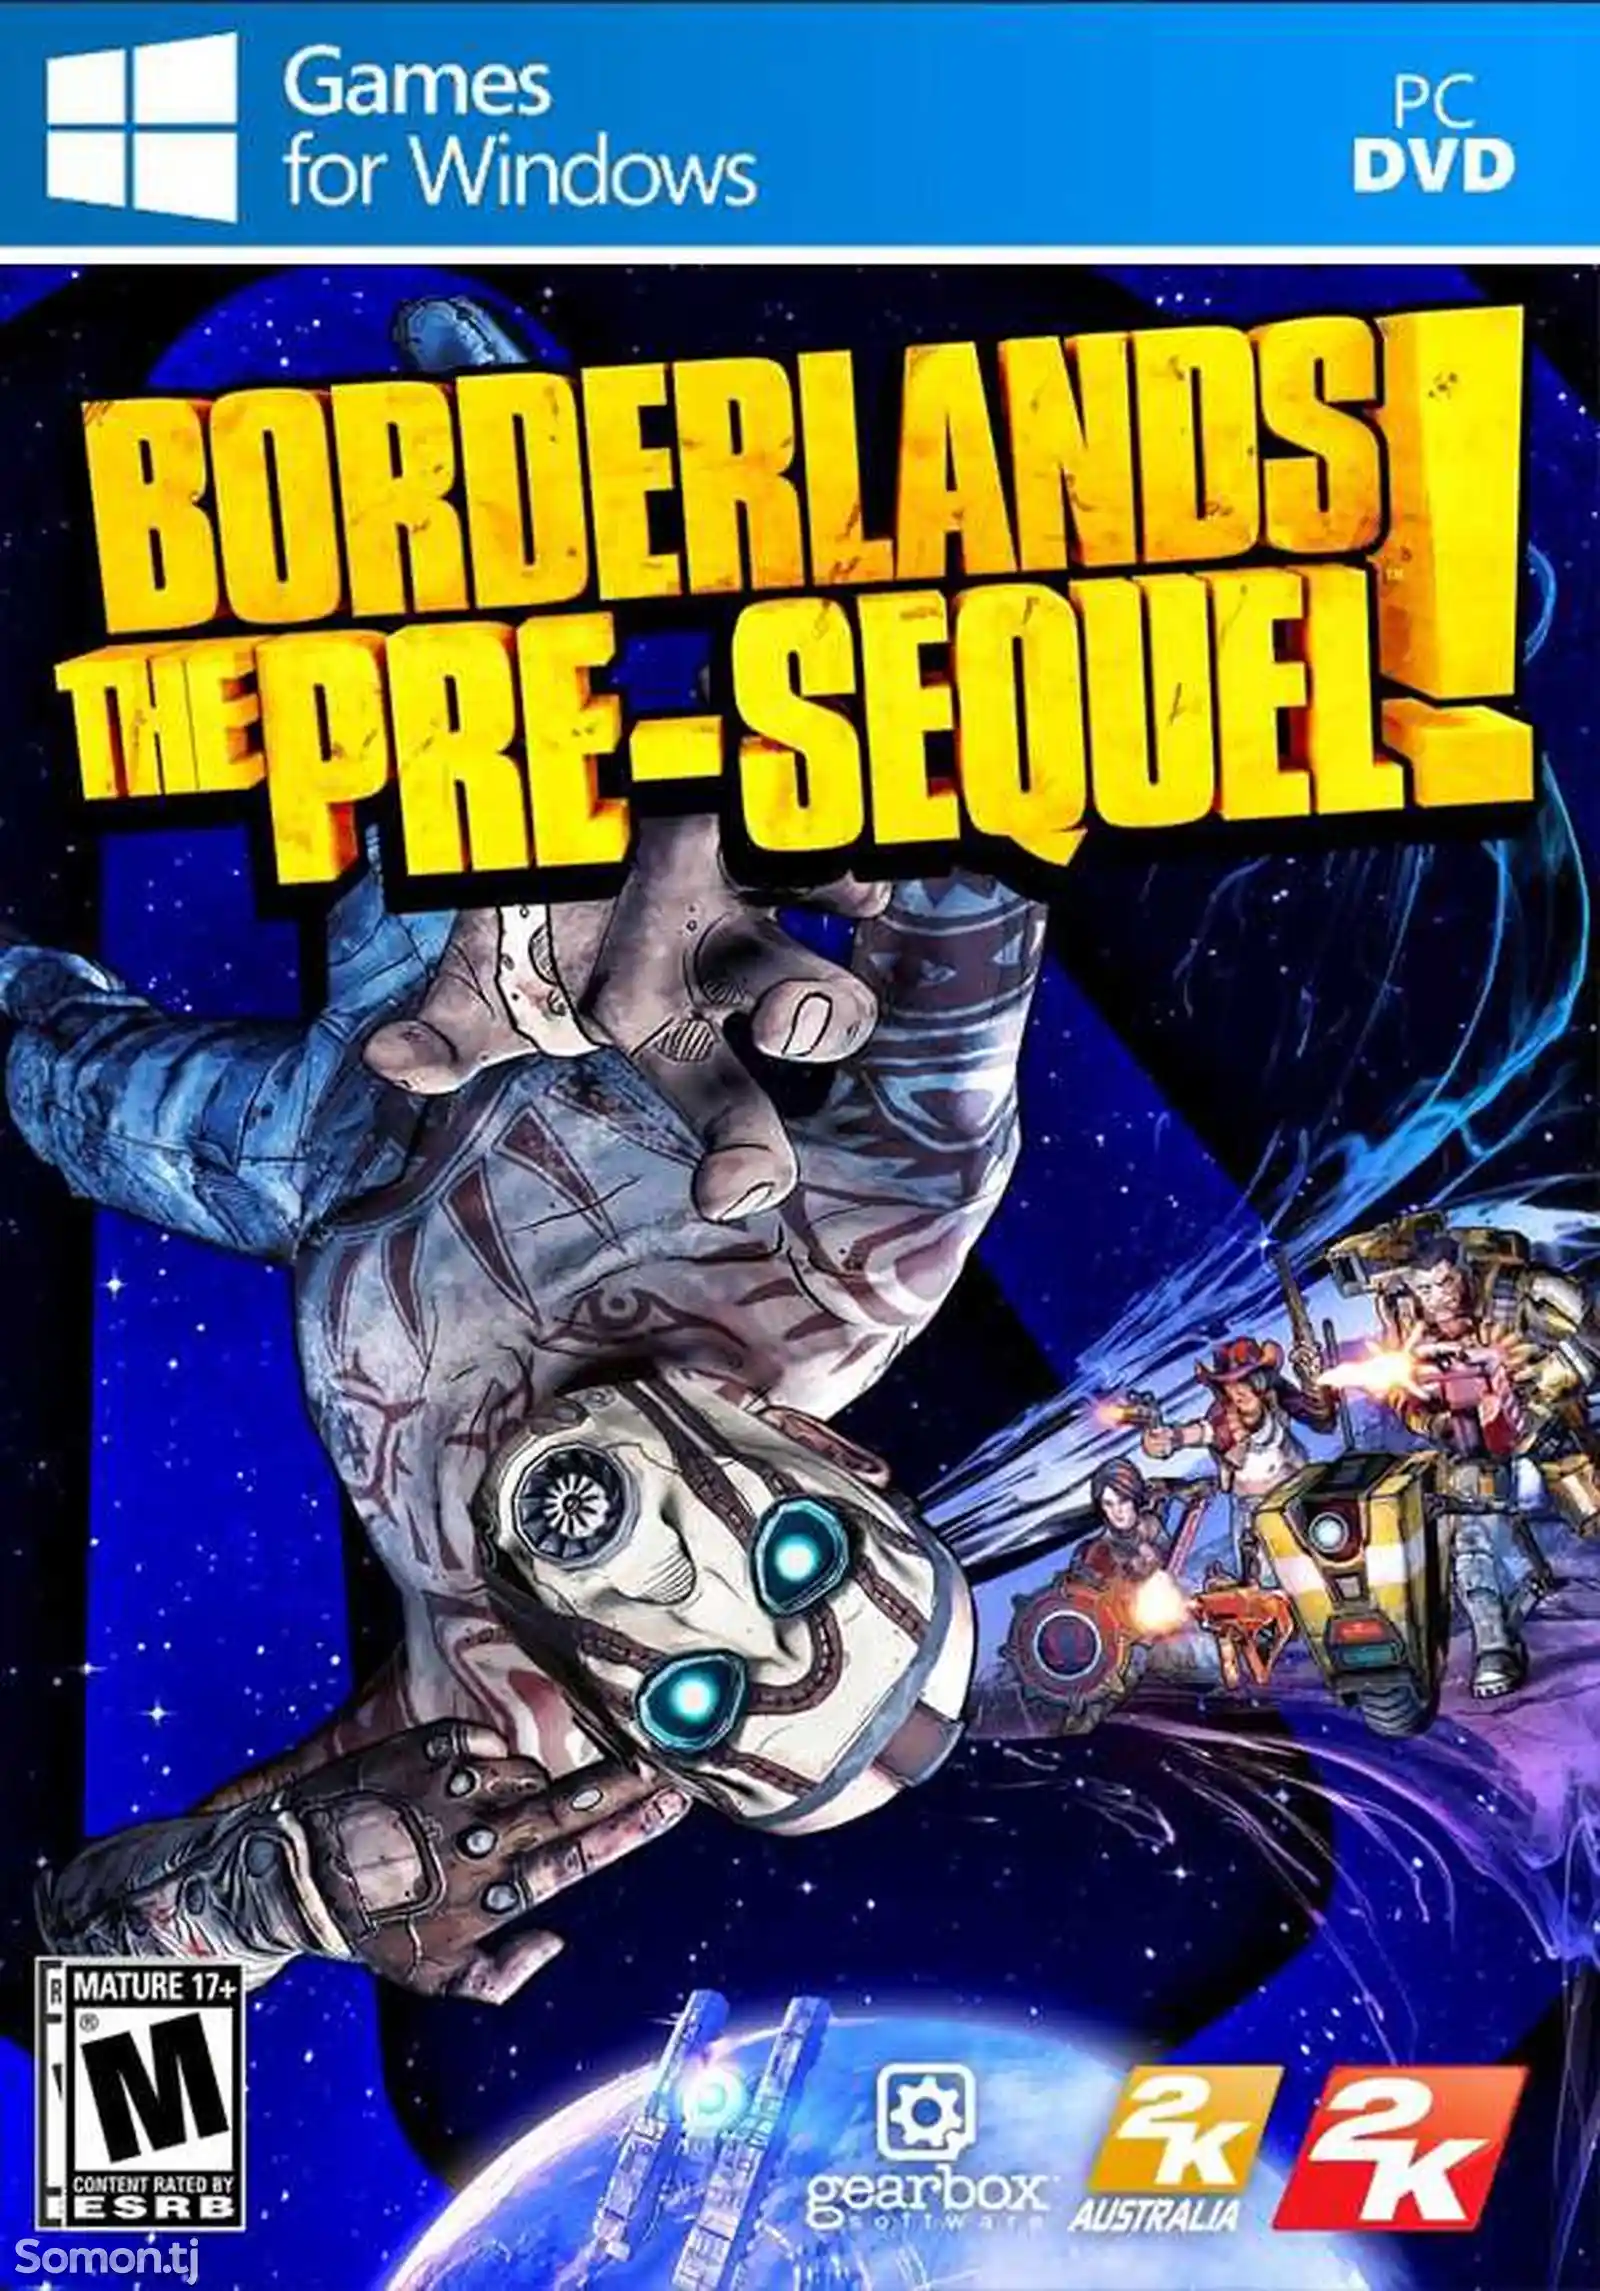 Игра Borderlands the pre sequel remastered для компьютера-пк-pc-1